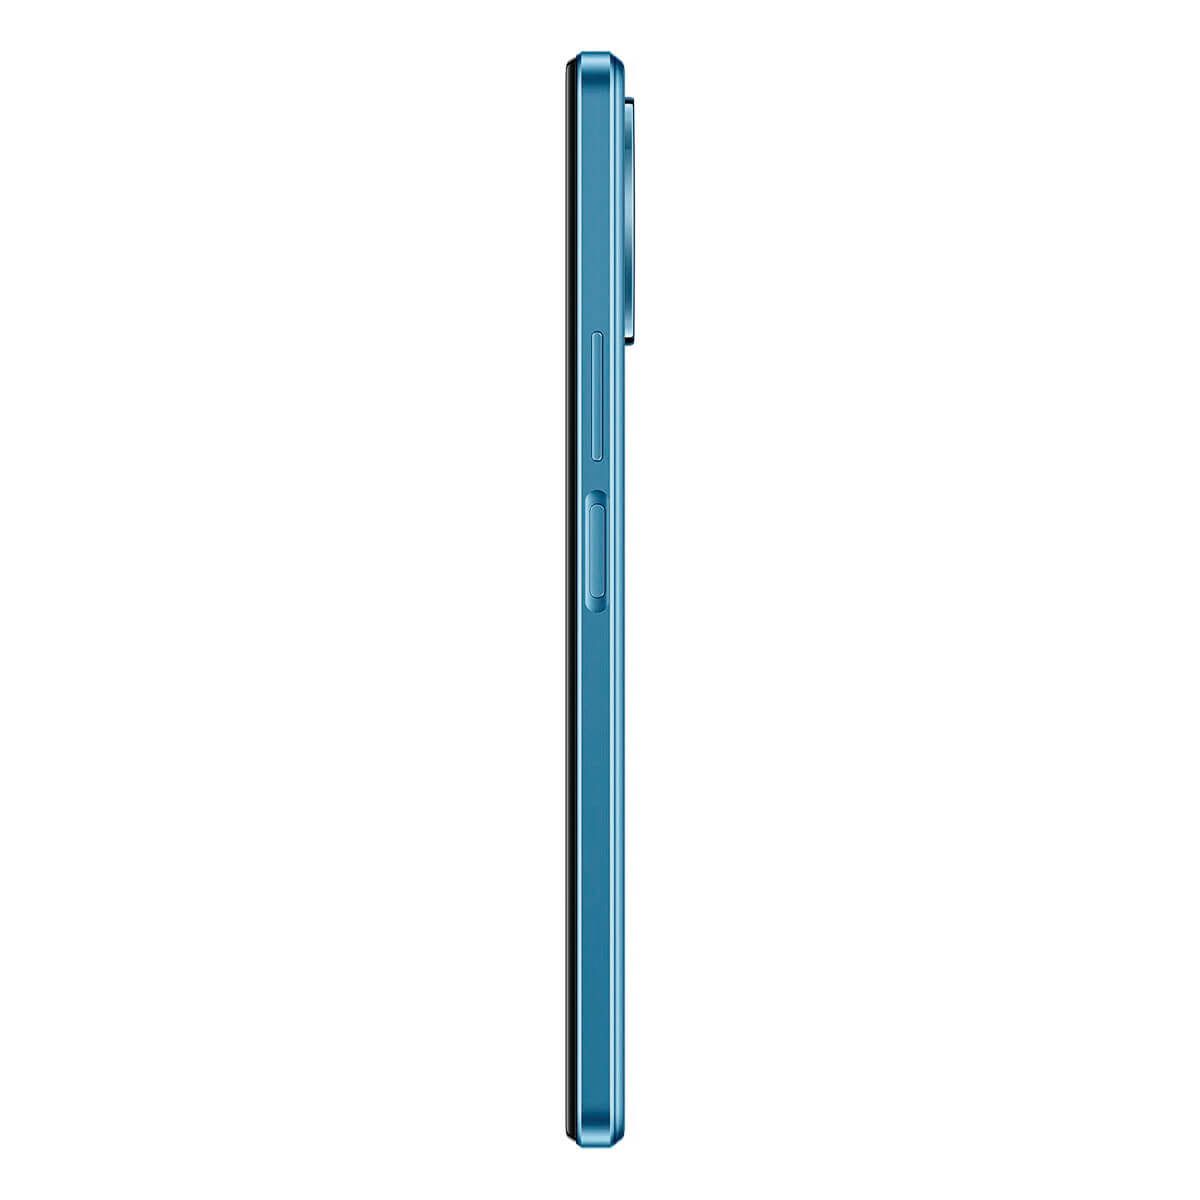 Honor X8 5G 6Go/128Go Bleu (Bleu Océan) Double SIM VNE-N41